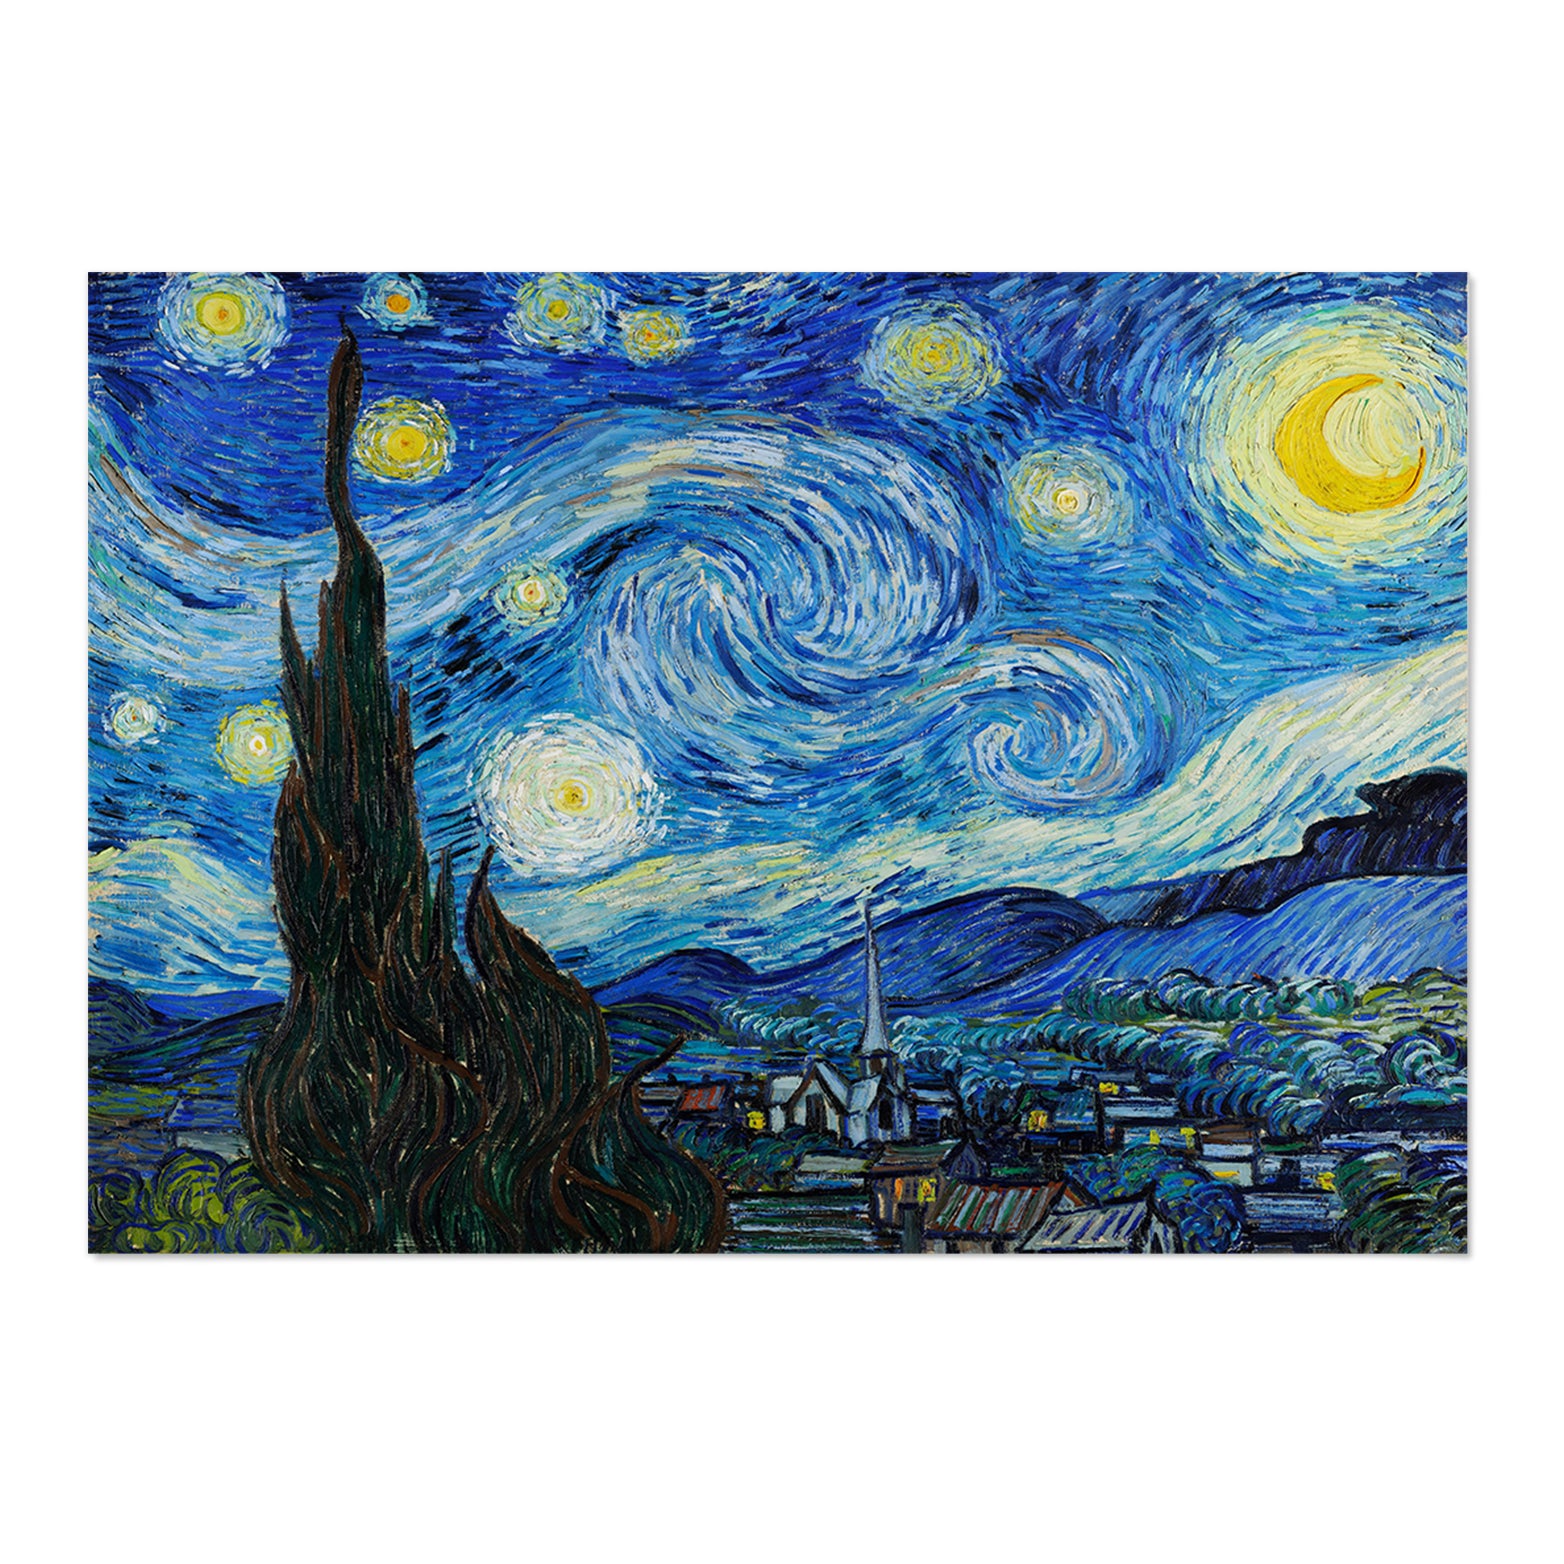 The Starry Night Art Print